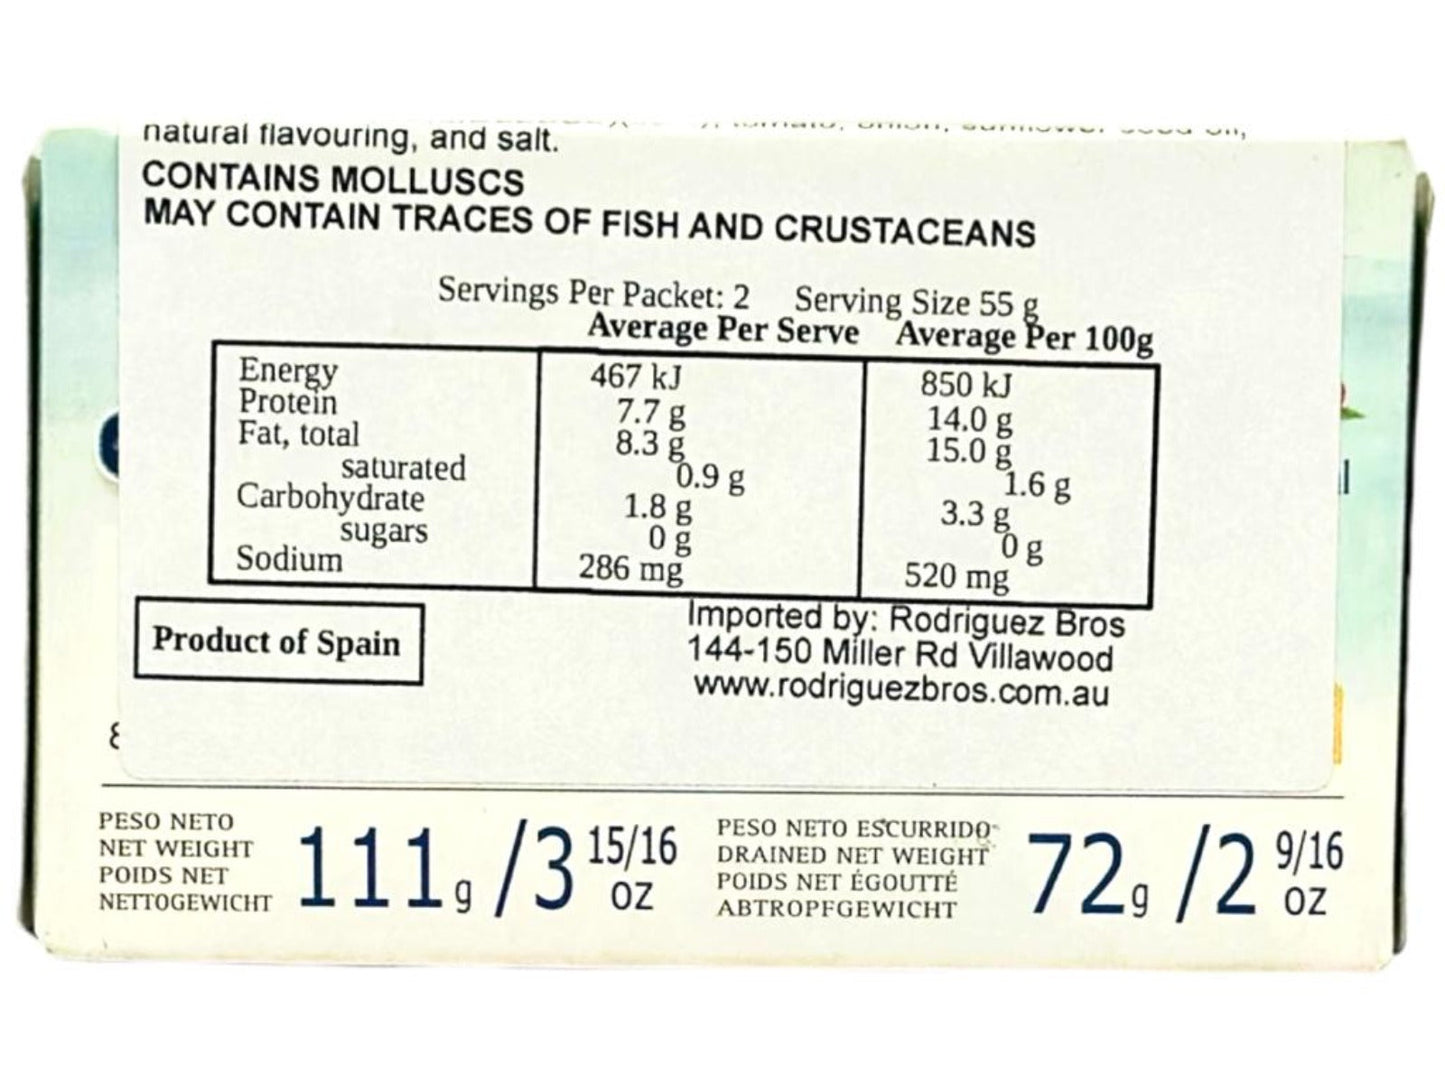 Vigilante Calamares (Rellenos) en Salsa Americana - Spanish Squids (Stuffed) in American Sauce 111g - 4 Pack Total 444g Best Before Jan 2026